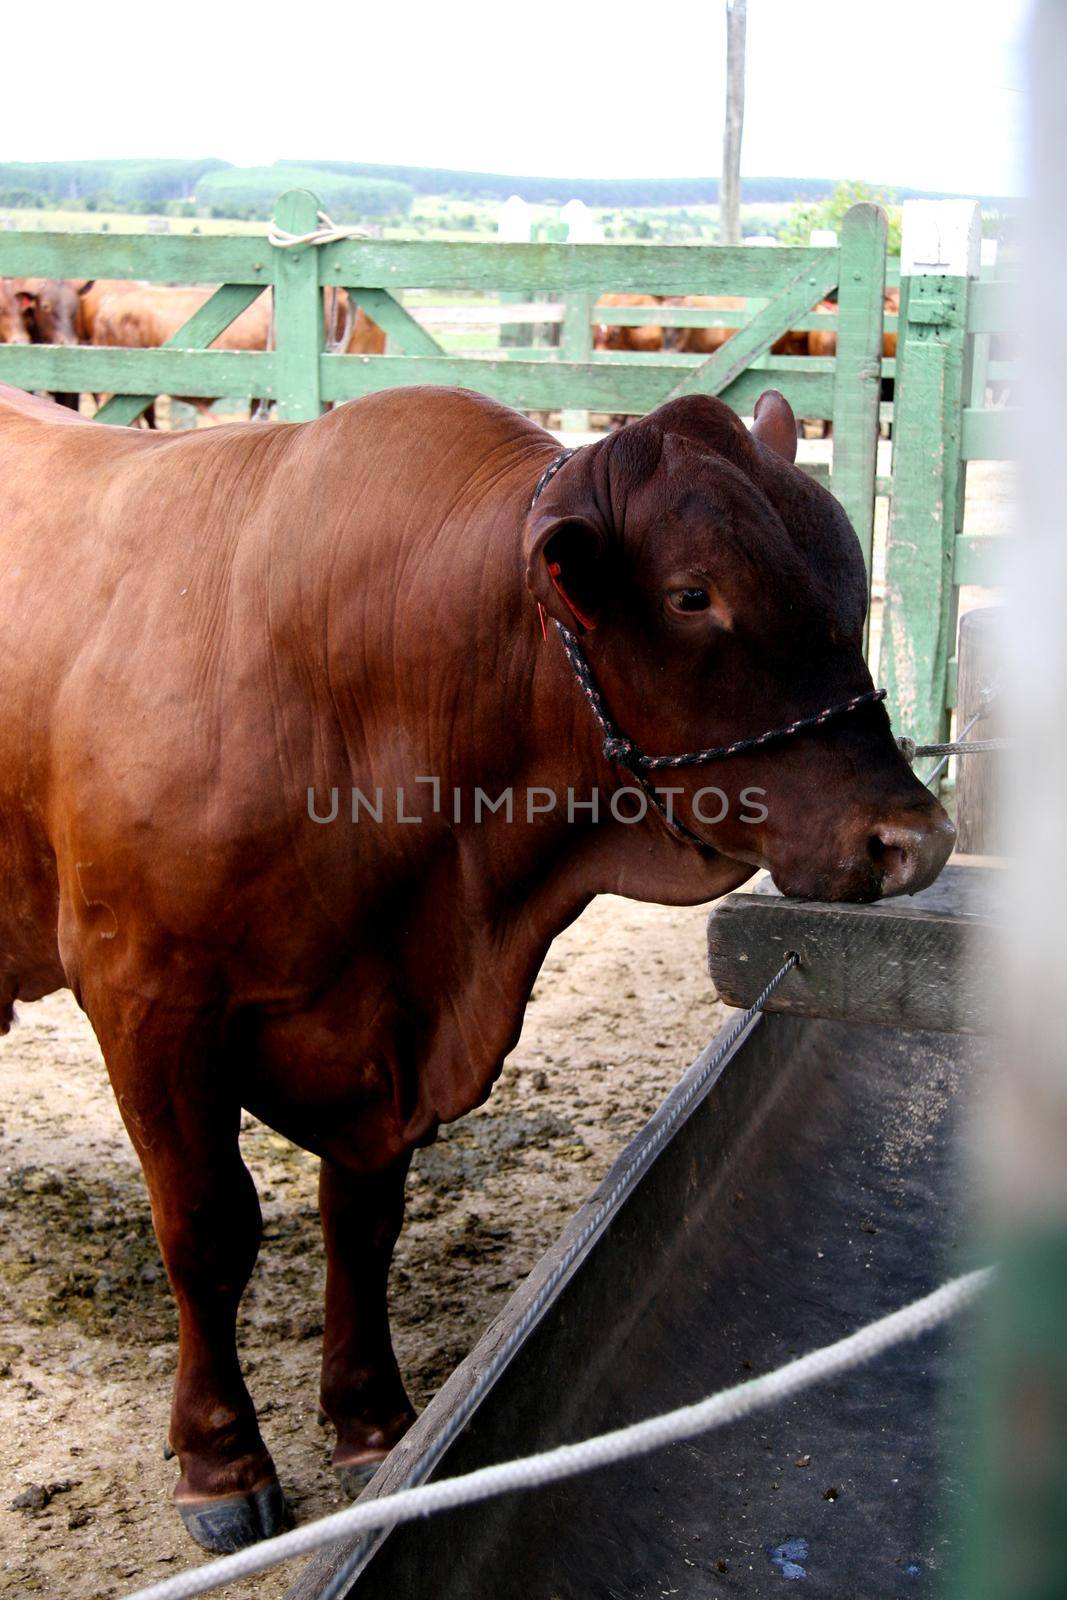 cattle ranch by joasouza